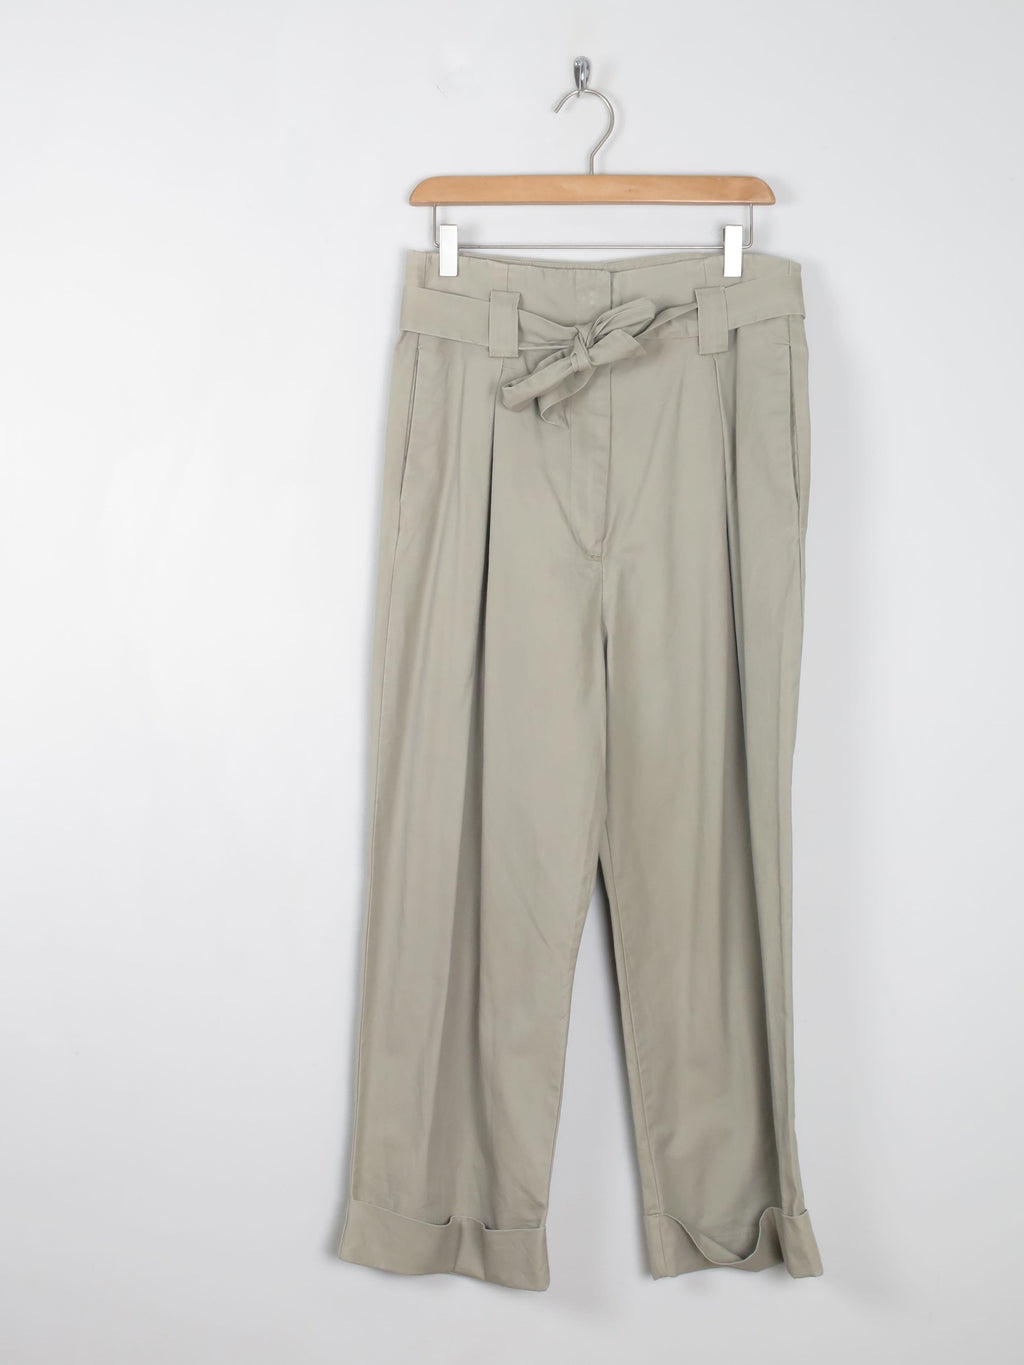 Women's Beige Khaki High Waisted Trousers 30W S - The Harlequin